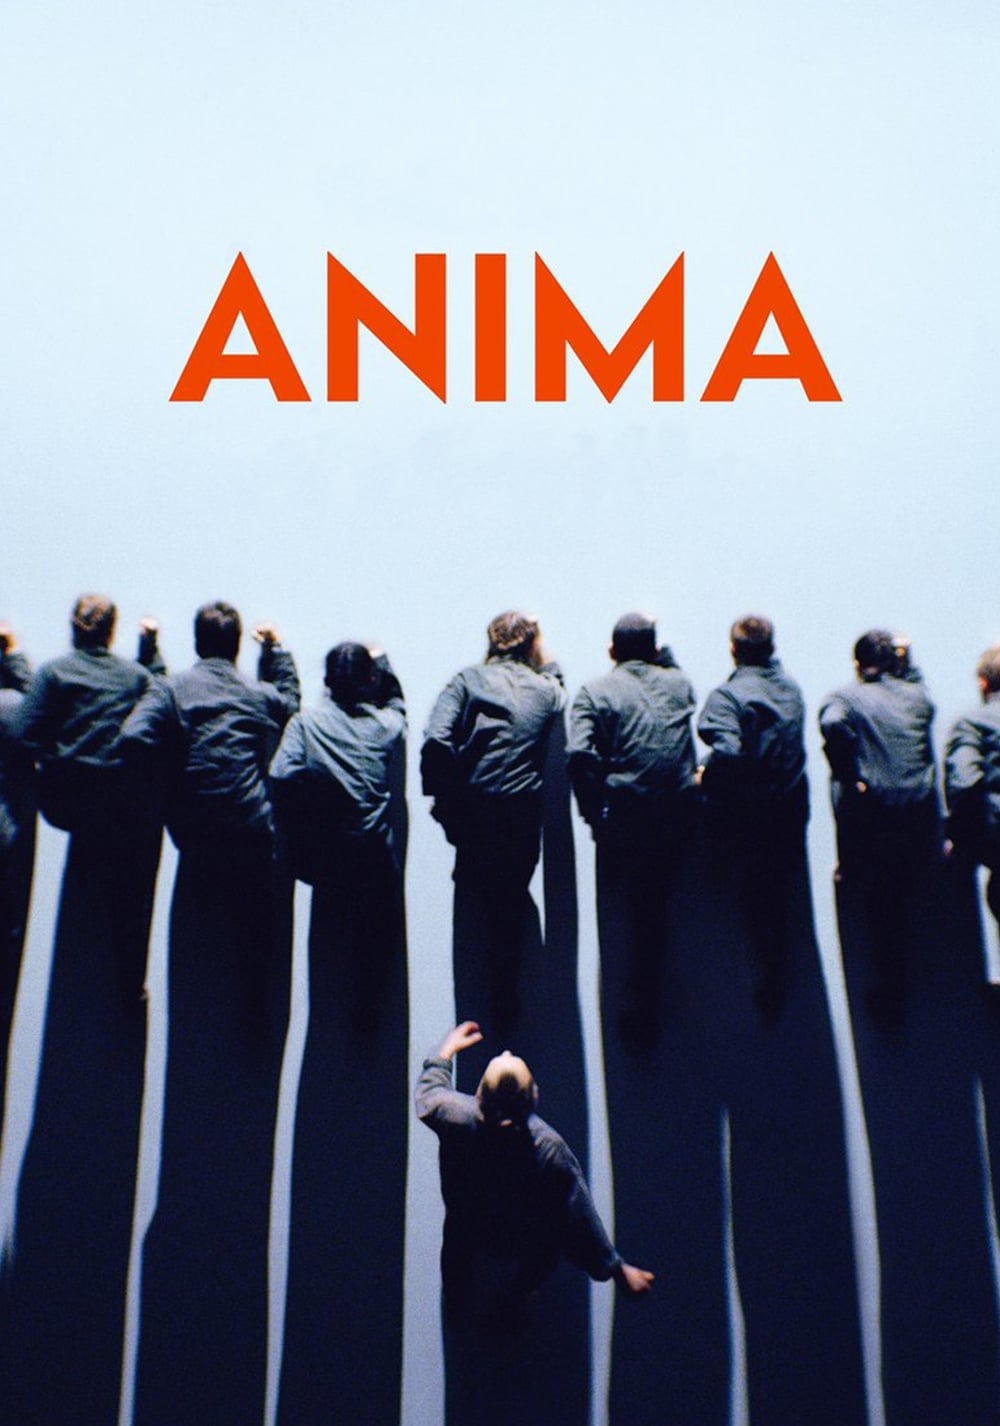 ANIMA - ANIMA (2019)